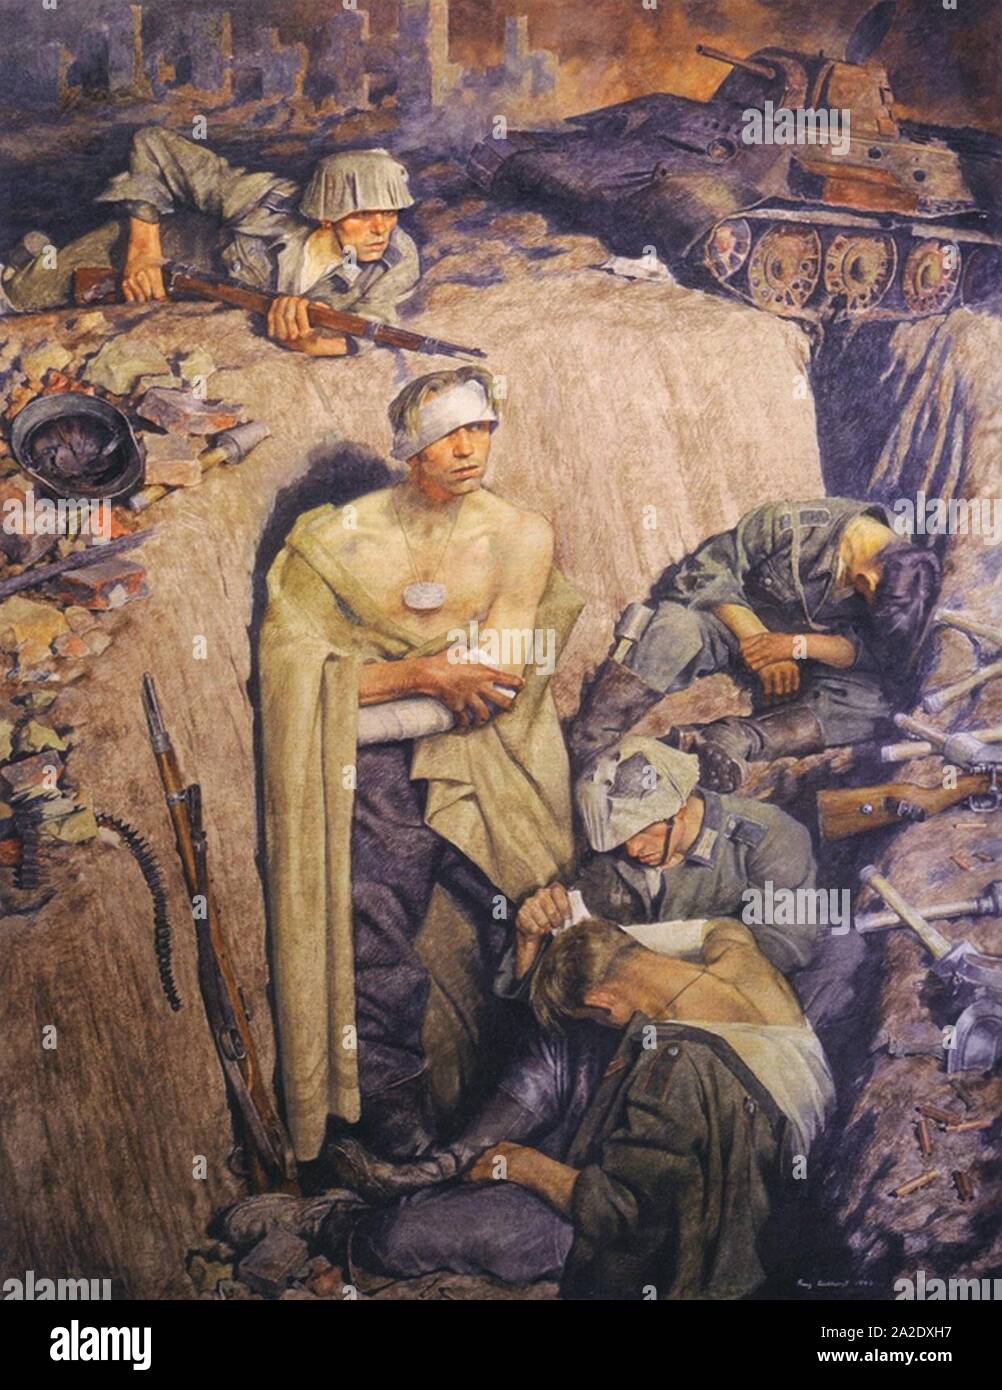 Eichhorst, F - Erinnerung an Stalingrad, 1943. Stock Photo